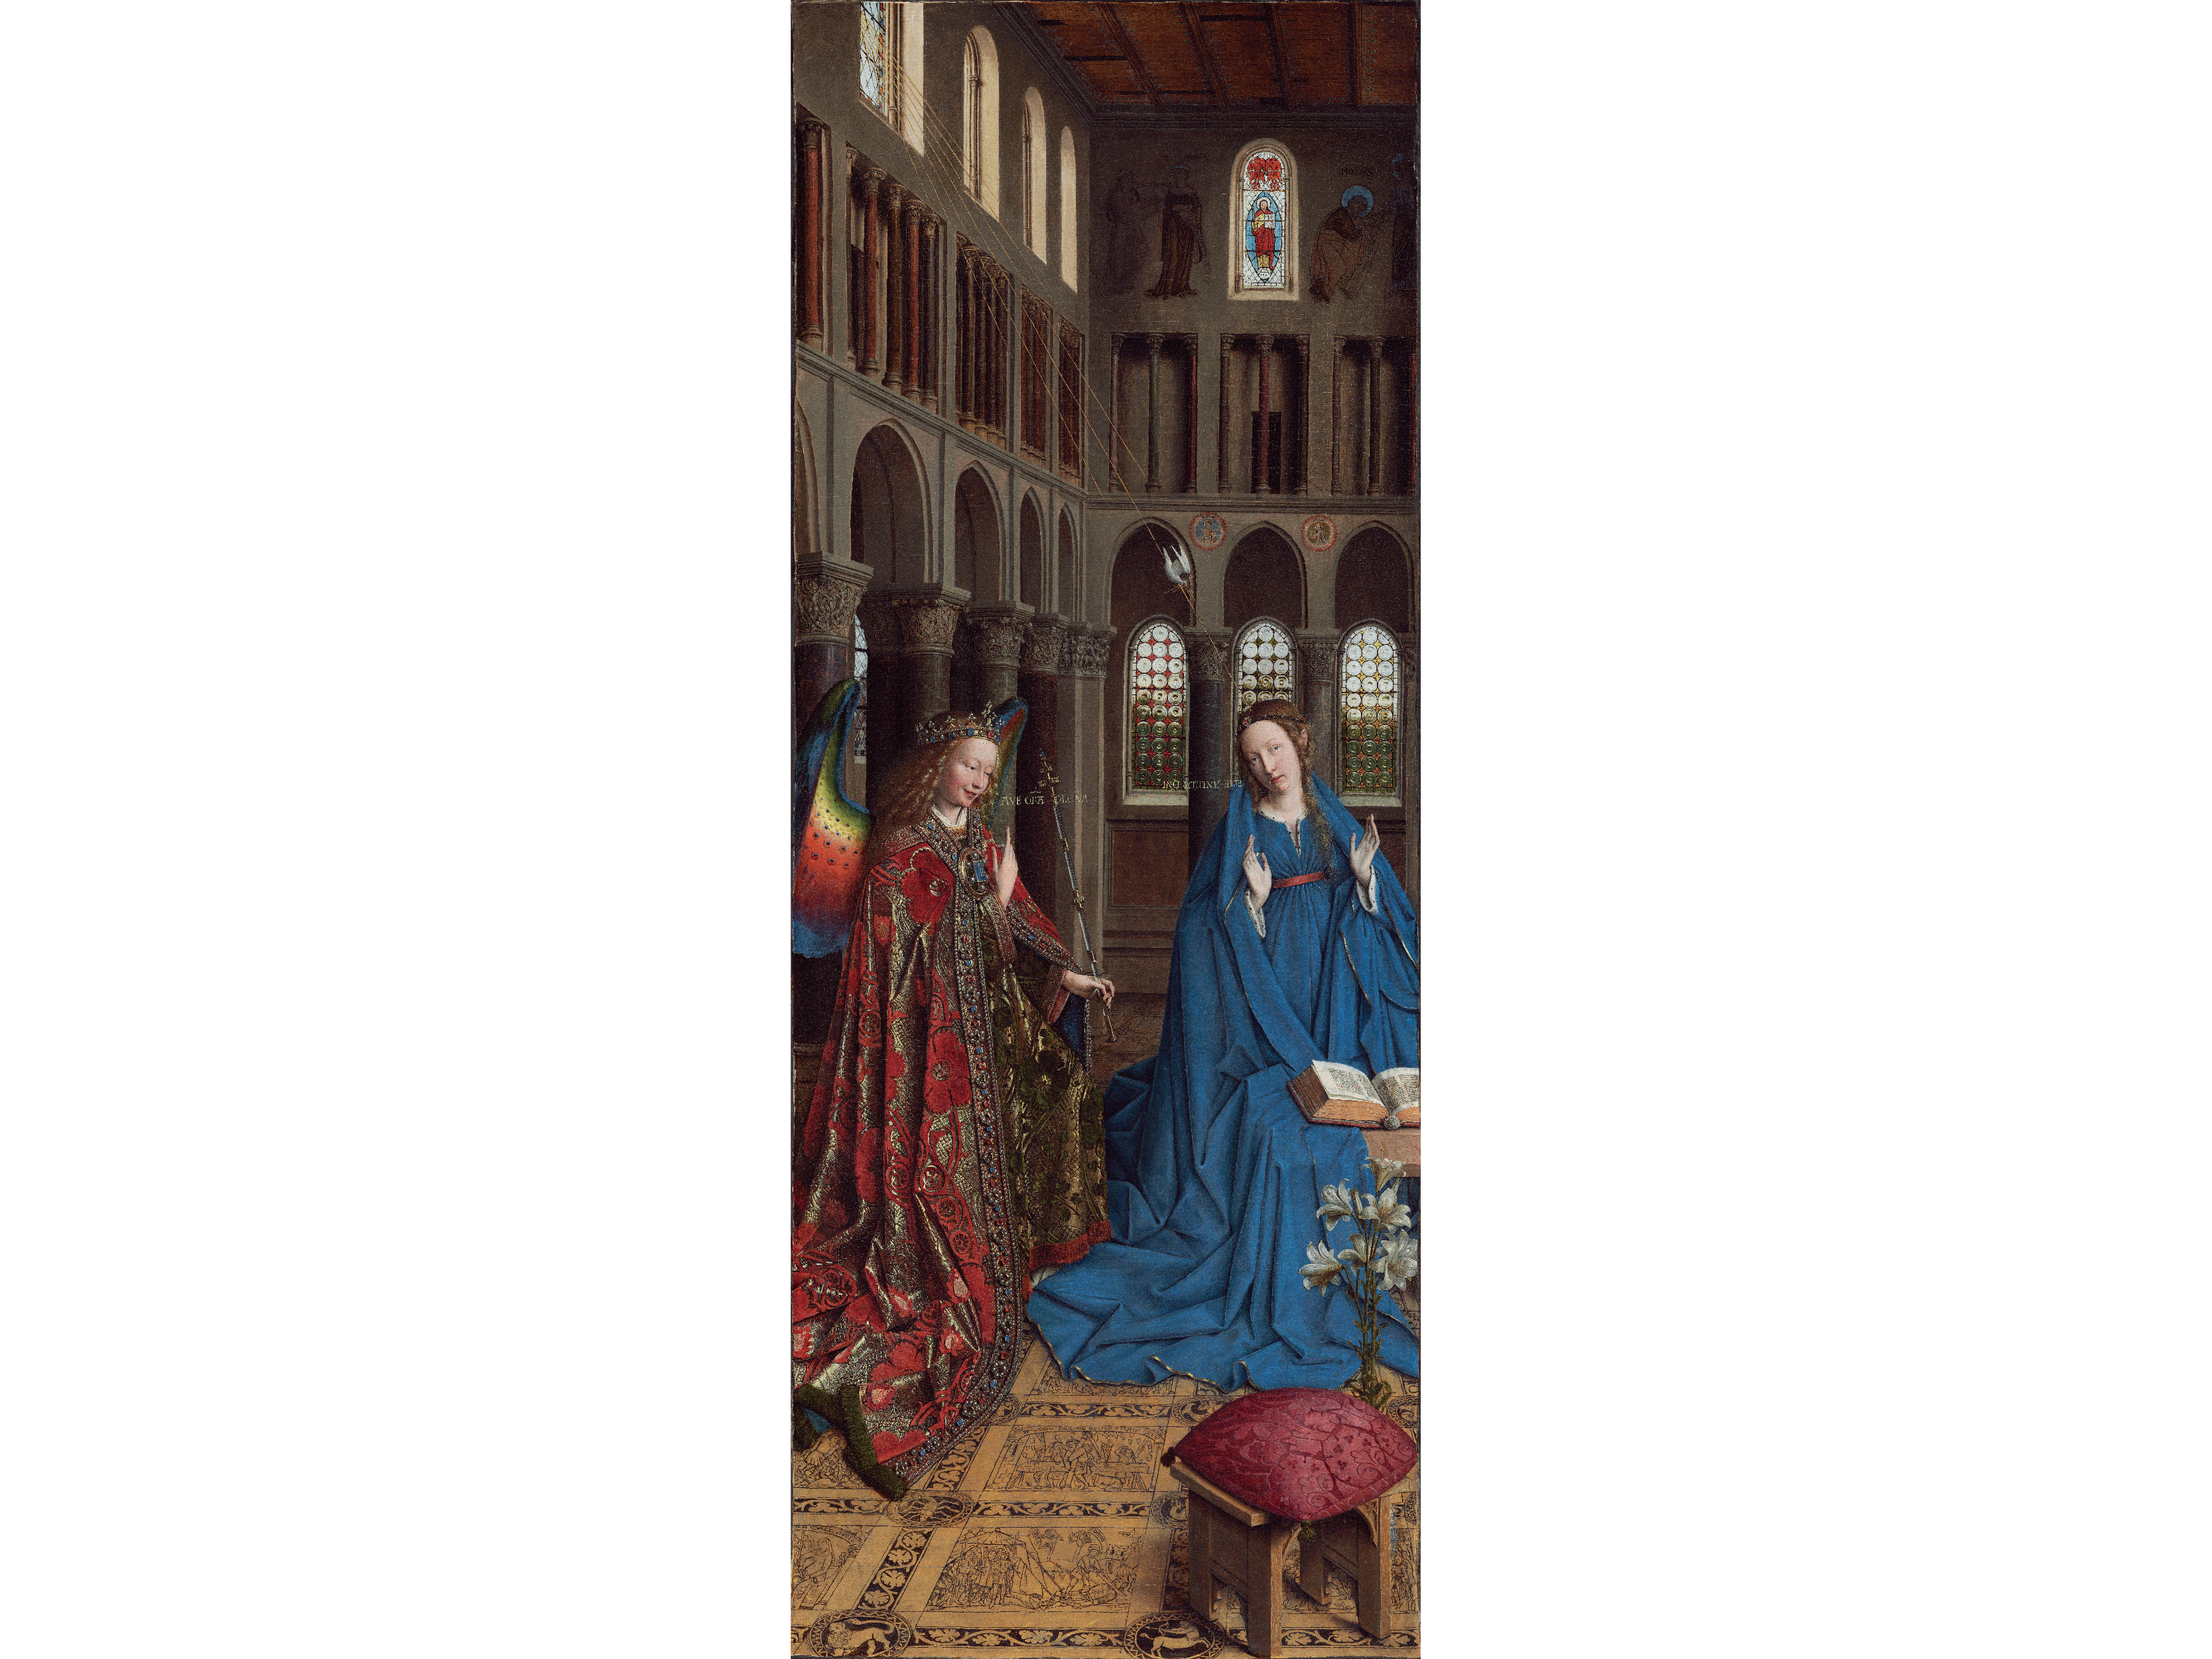 （ Annunciation, 1434, Jan van Eyck ）